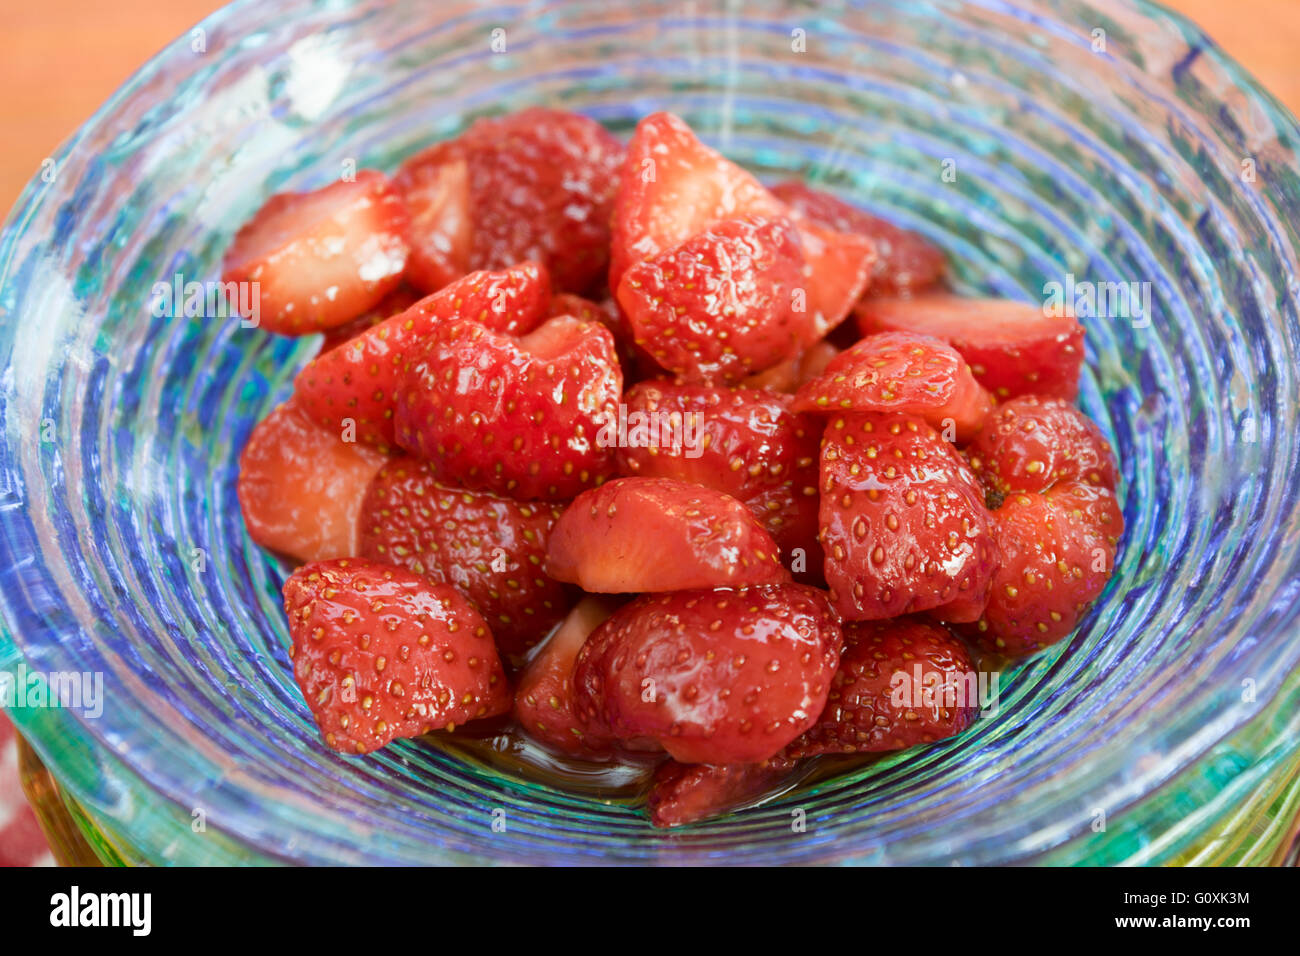 chopped strawberries salad Stock Photo